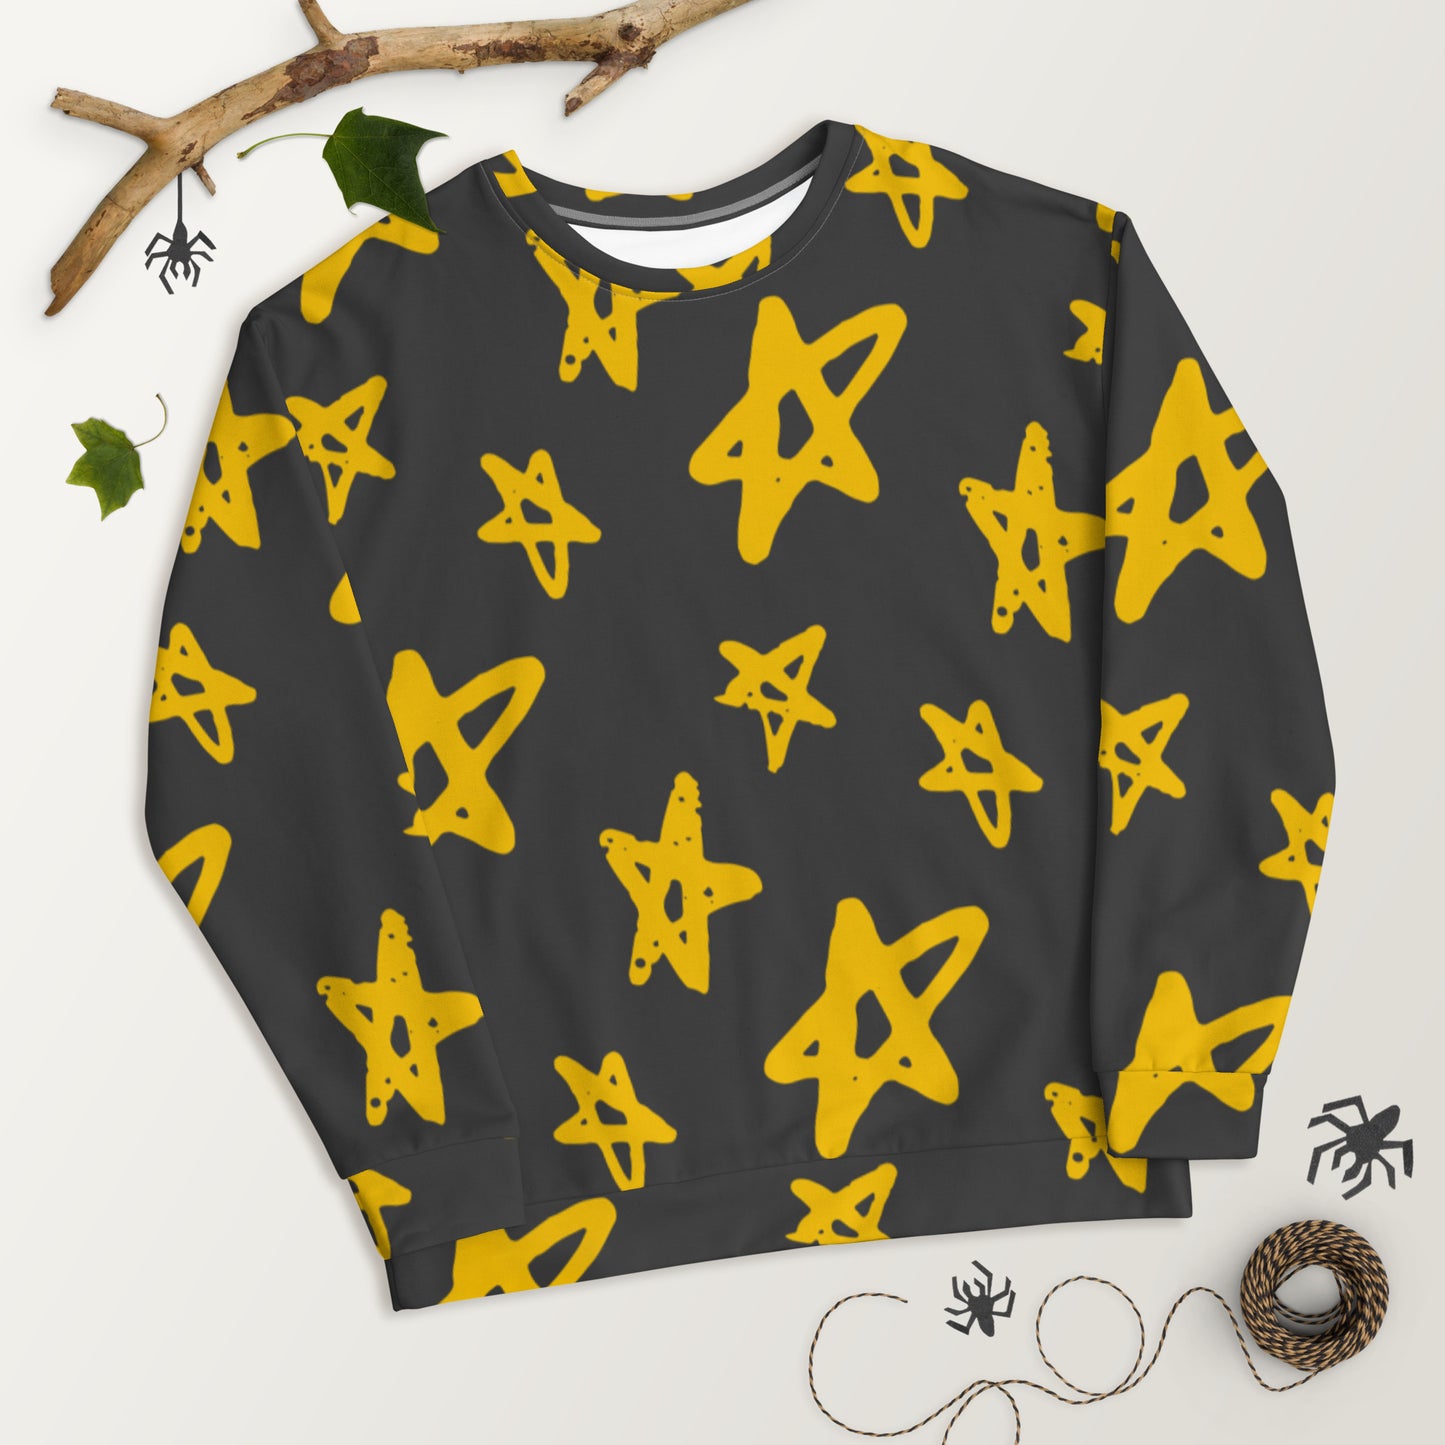 Star Pattern Sweatshirt